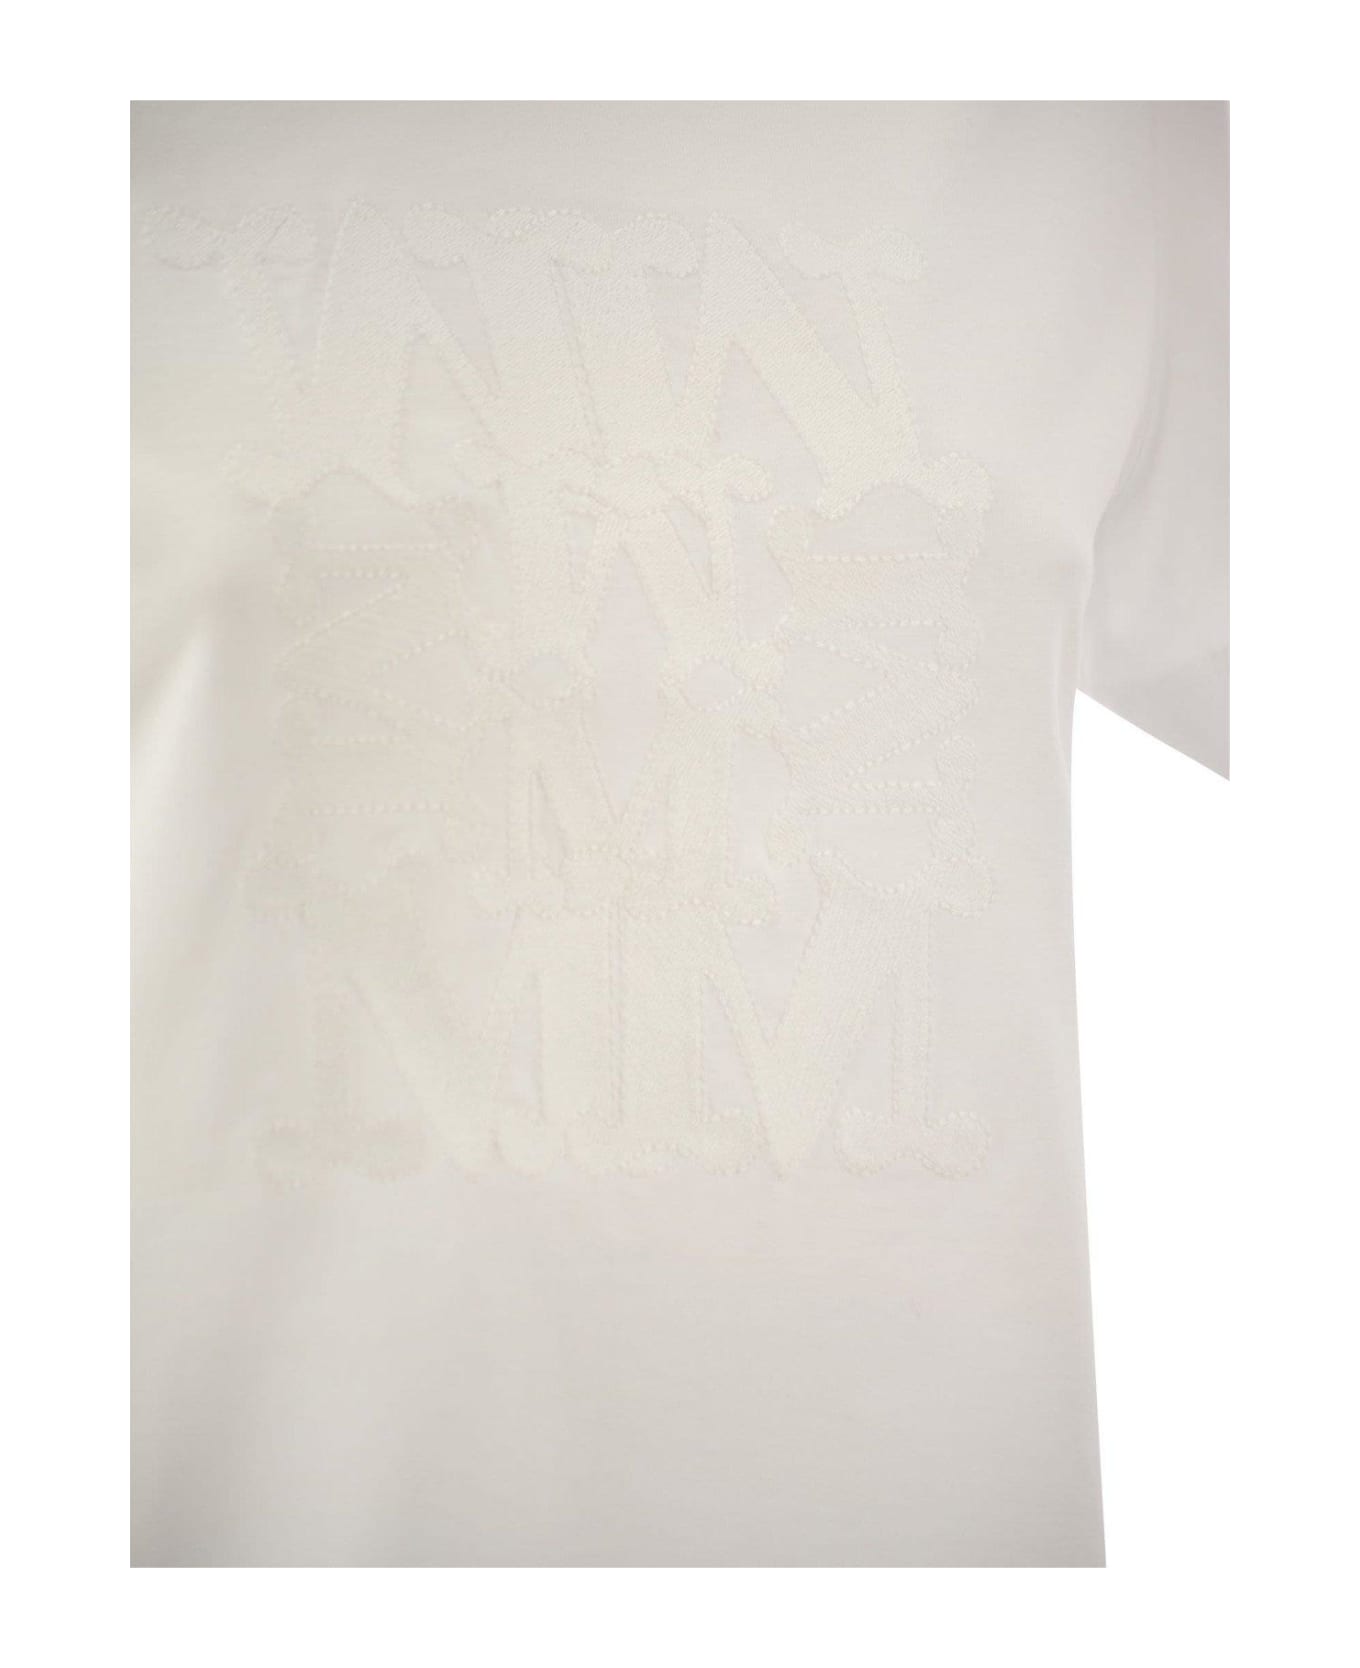 Max Mara Crewneck Short-sleeved T-shirt - White Tシャツ